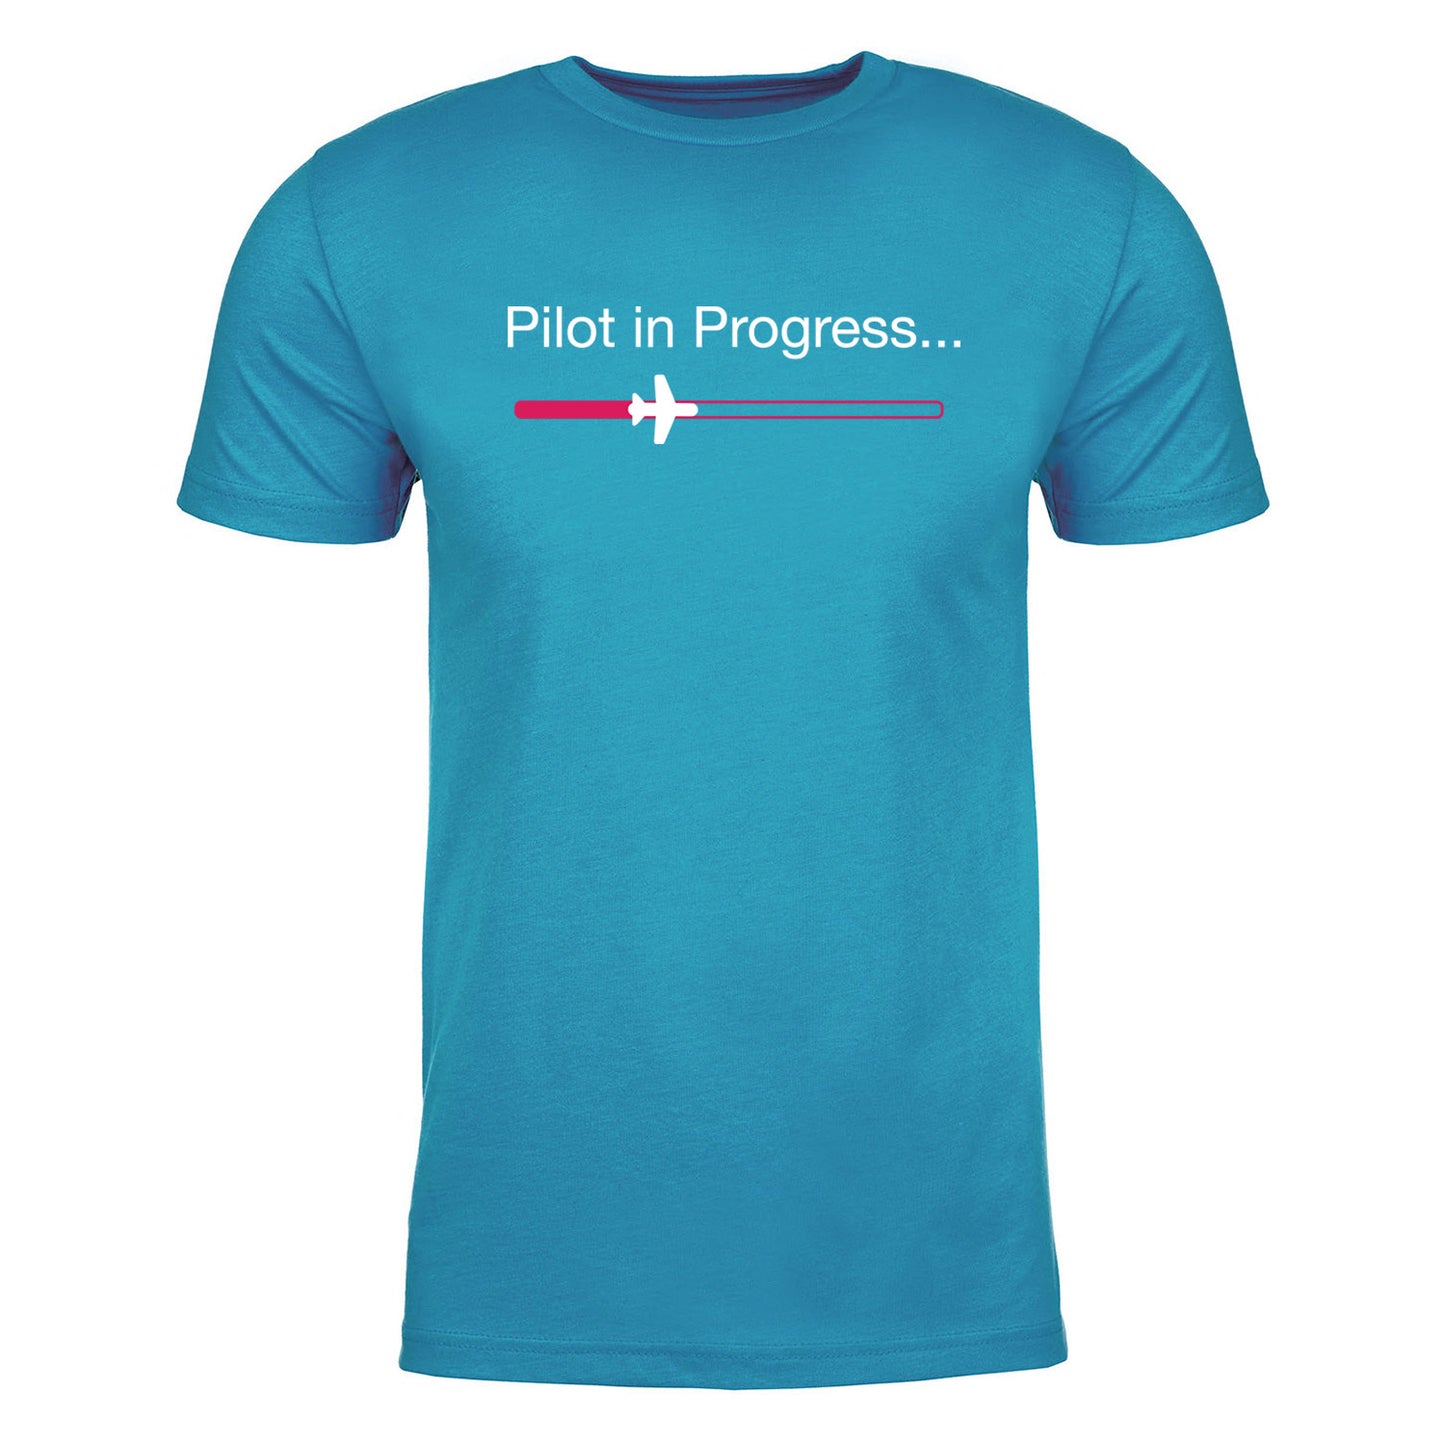 Pilot in Progress T-shirt • Great Student Pilot Gift